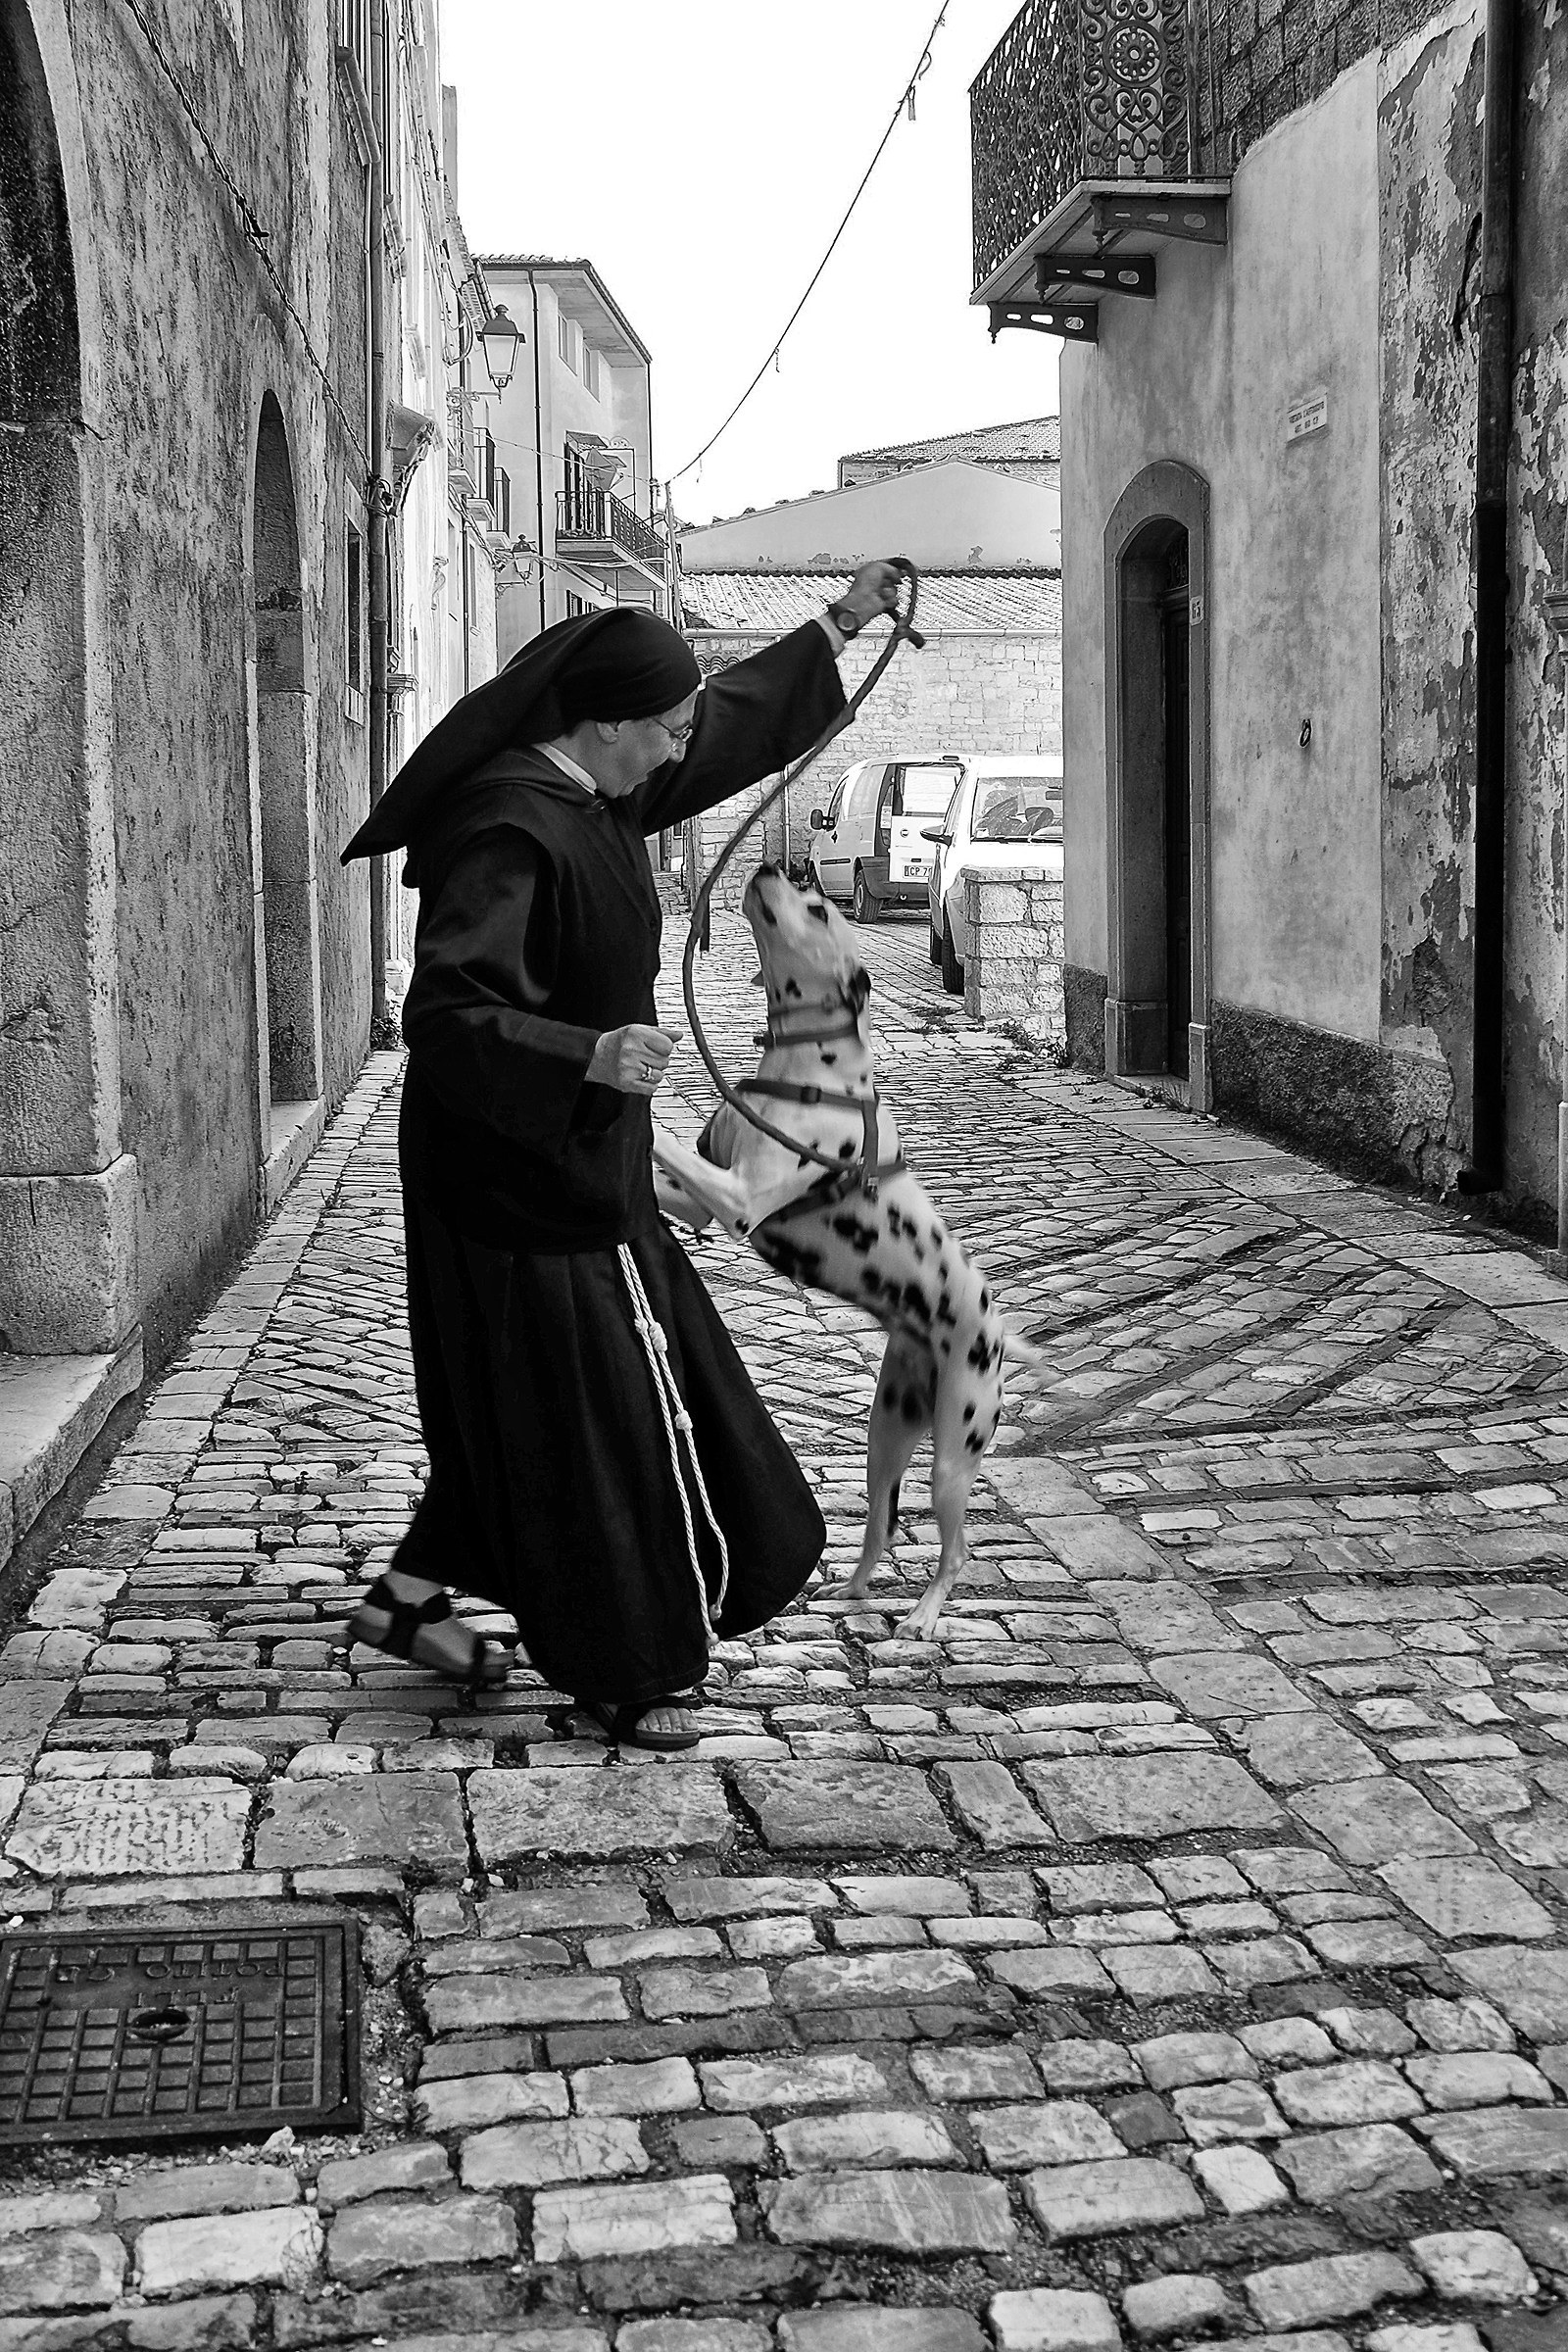 The nun and the Dalmatian...